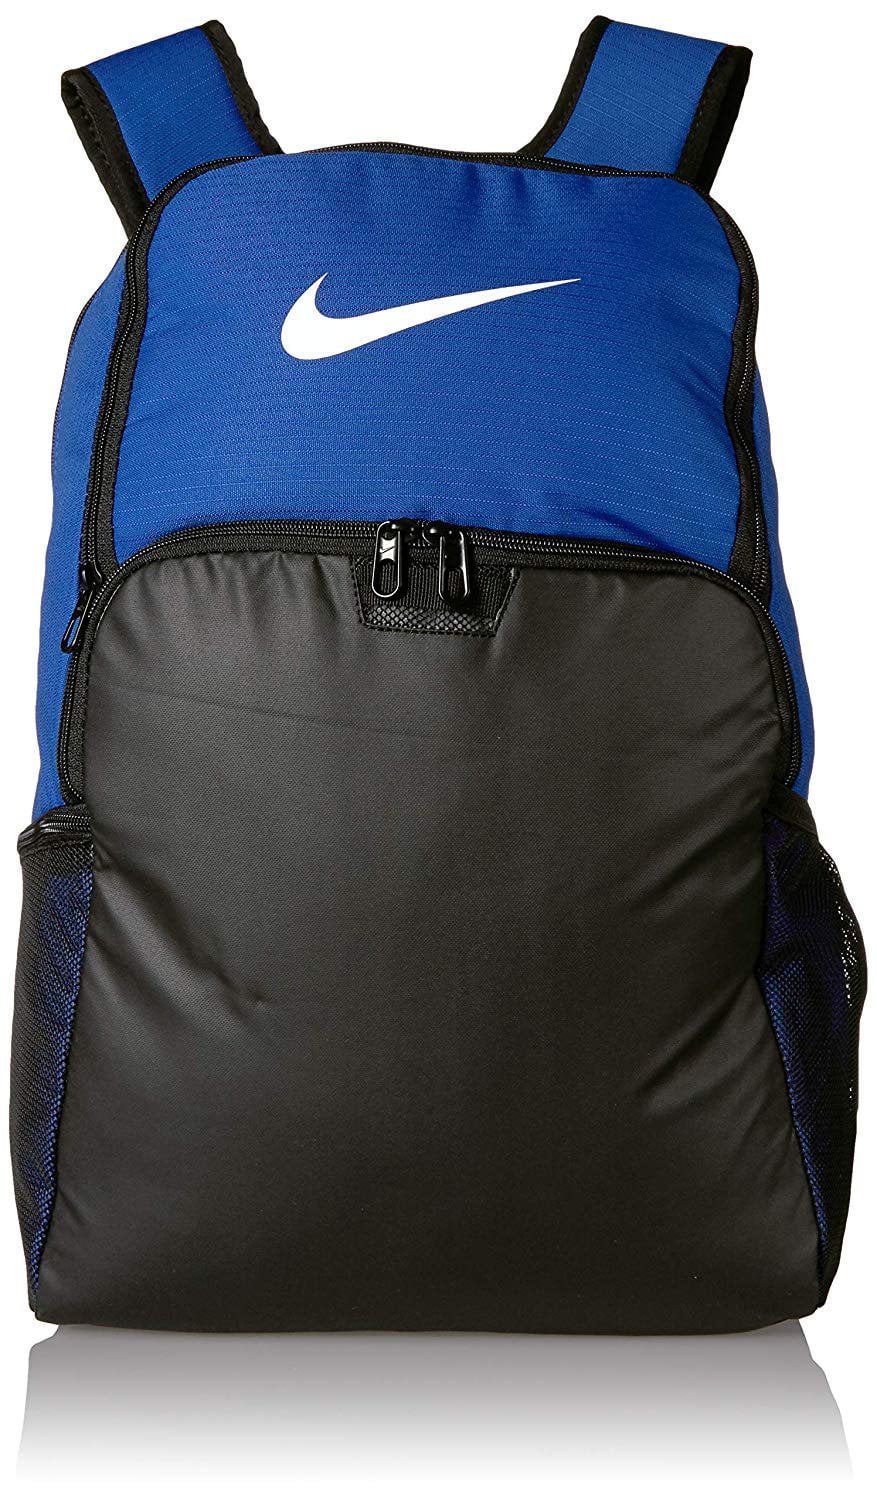 NIKE 9.0 X-Large Backpack, BA5959 (Midnight Navy/Black/White) - Walmart.com